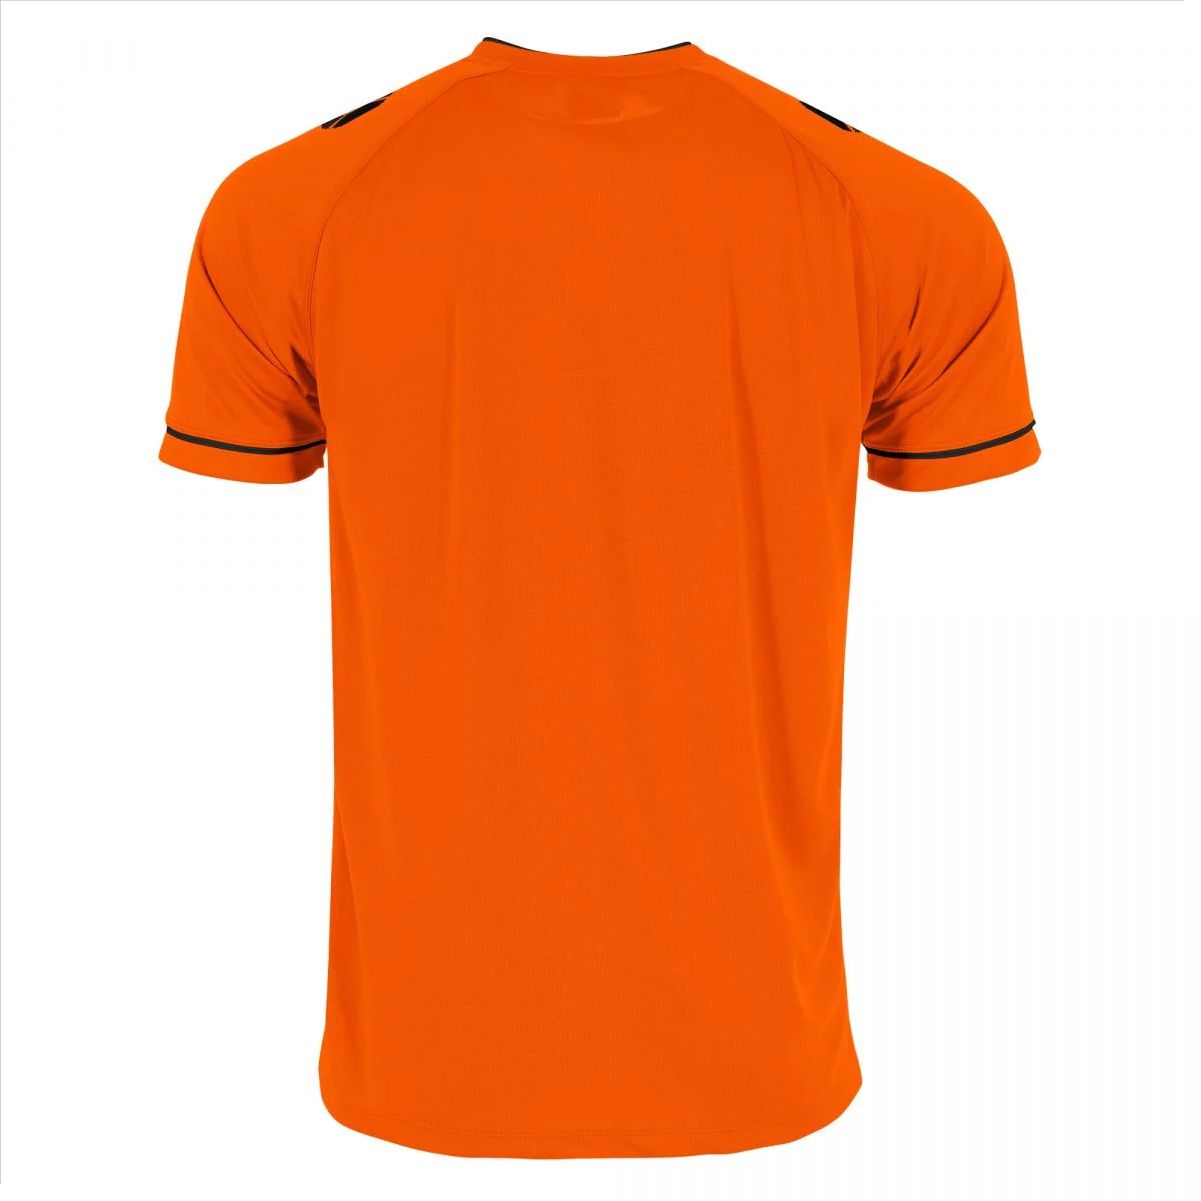 Stanno - Dash Shirt -Orange & Black